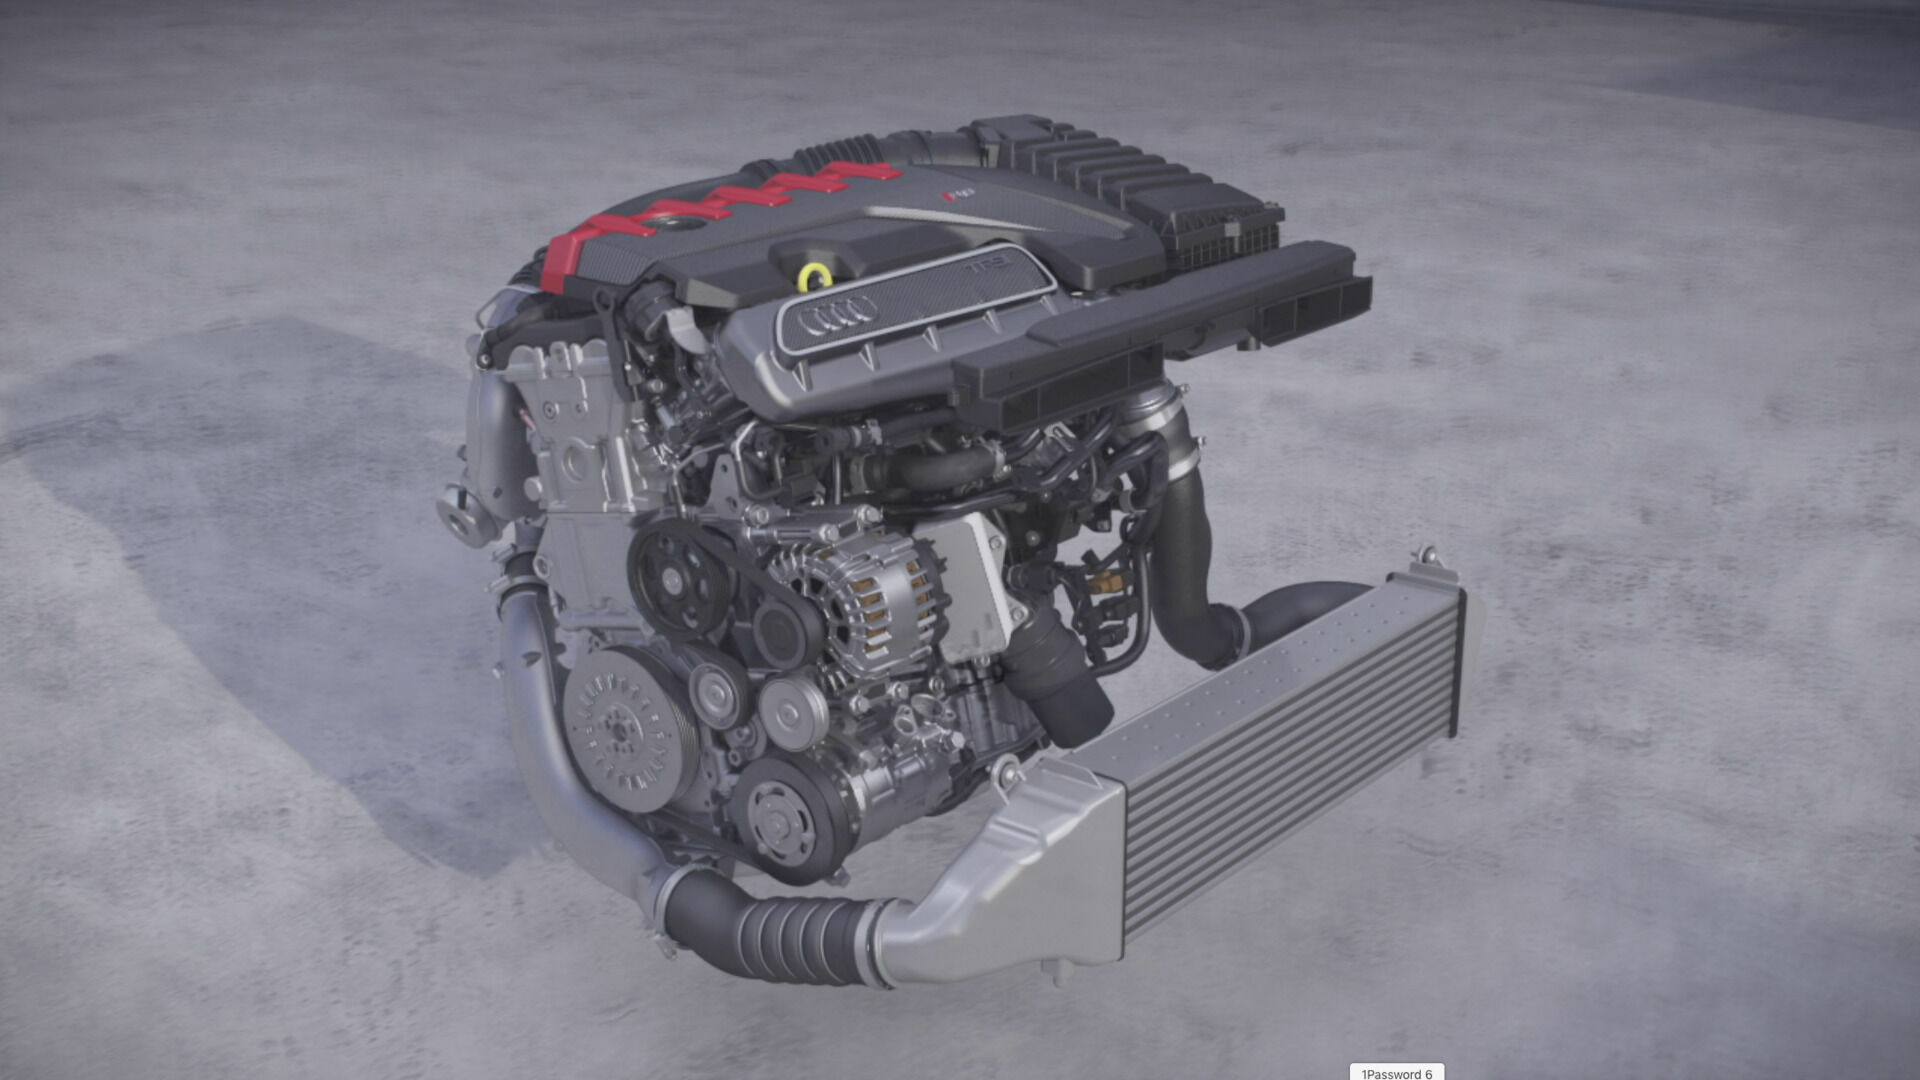 Audi TT RS Antriebsstrang (Animation)